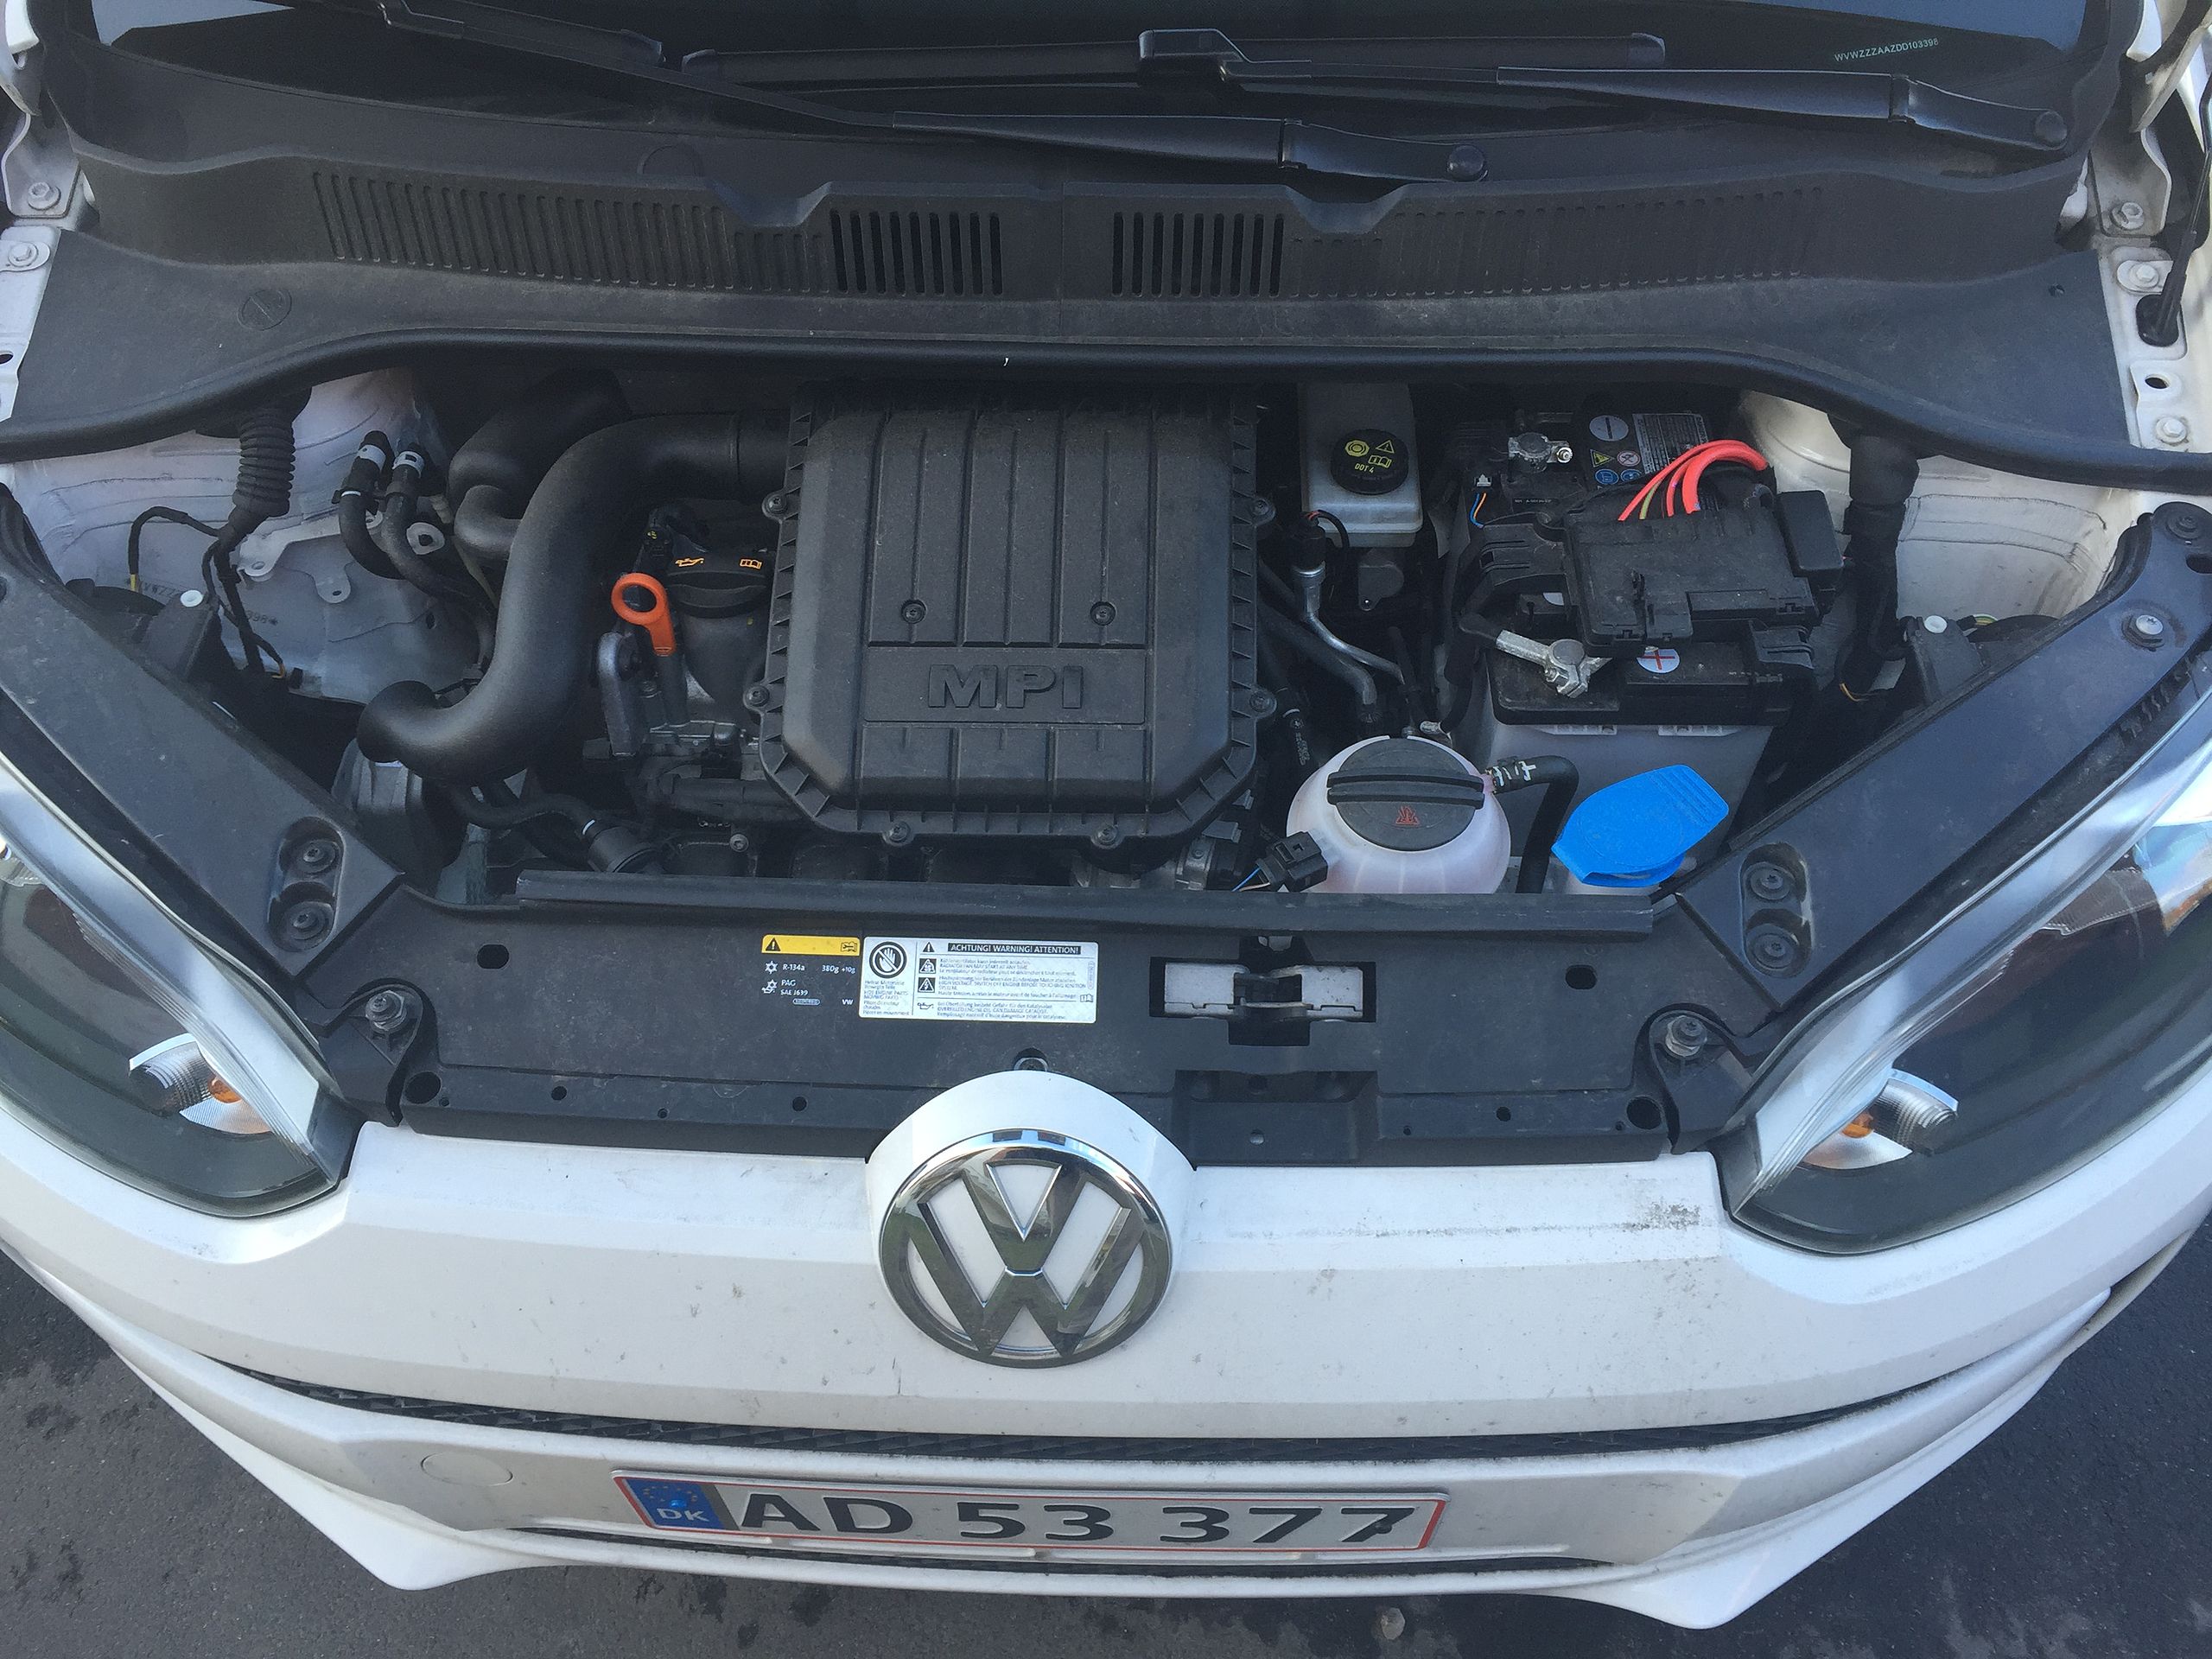 File:VW up! engine.jpg - Wikimedia Commons